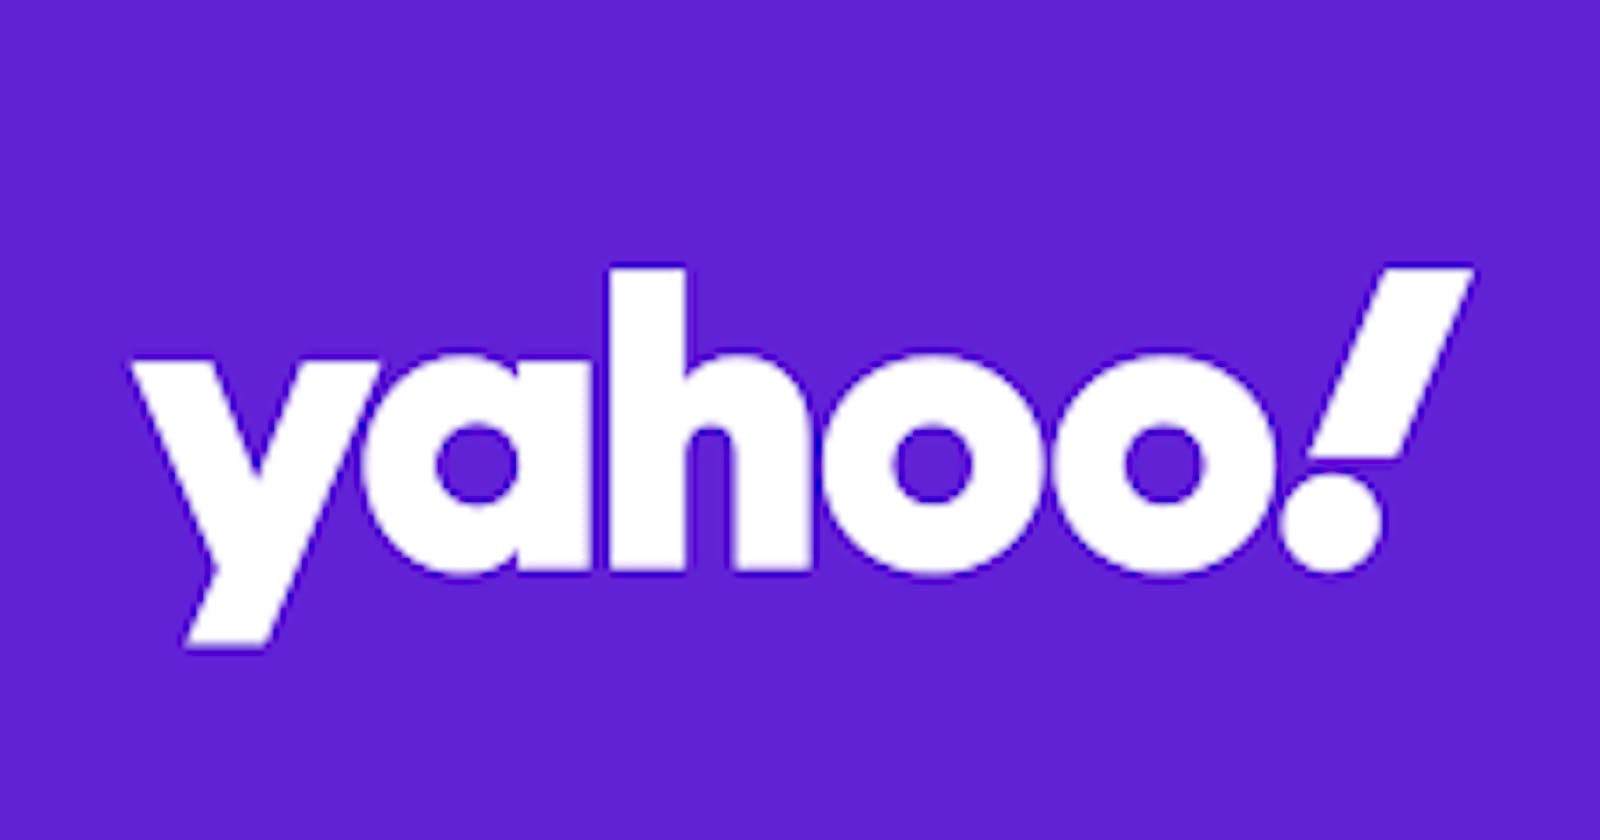 How Google Killed Yahoo with amazing UX?